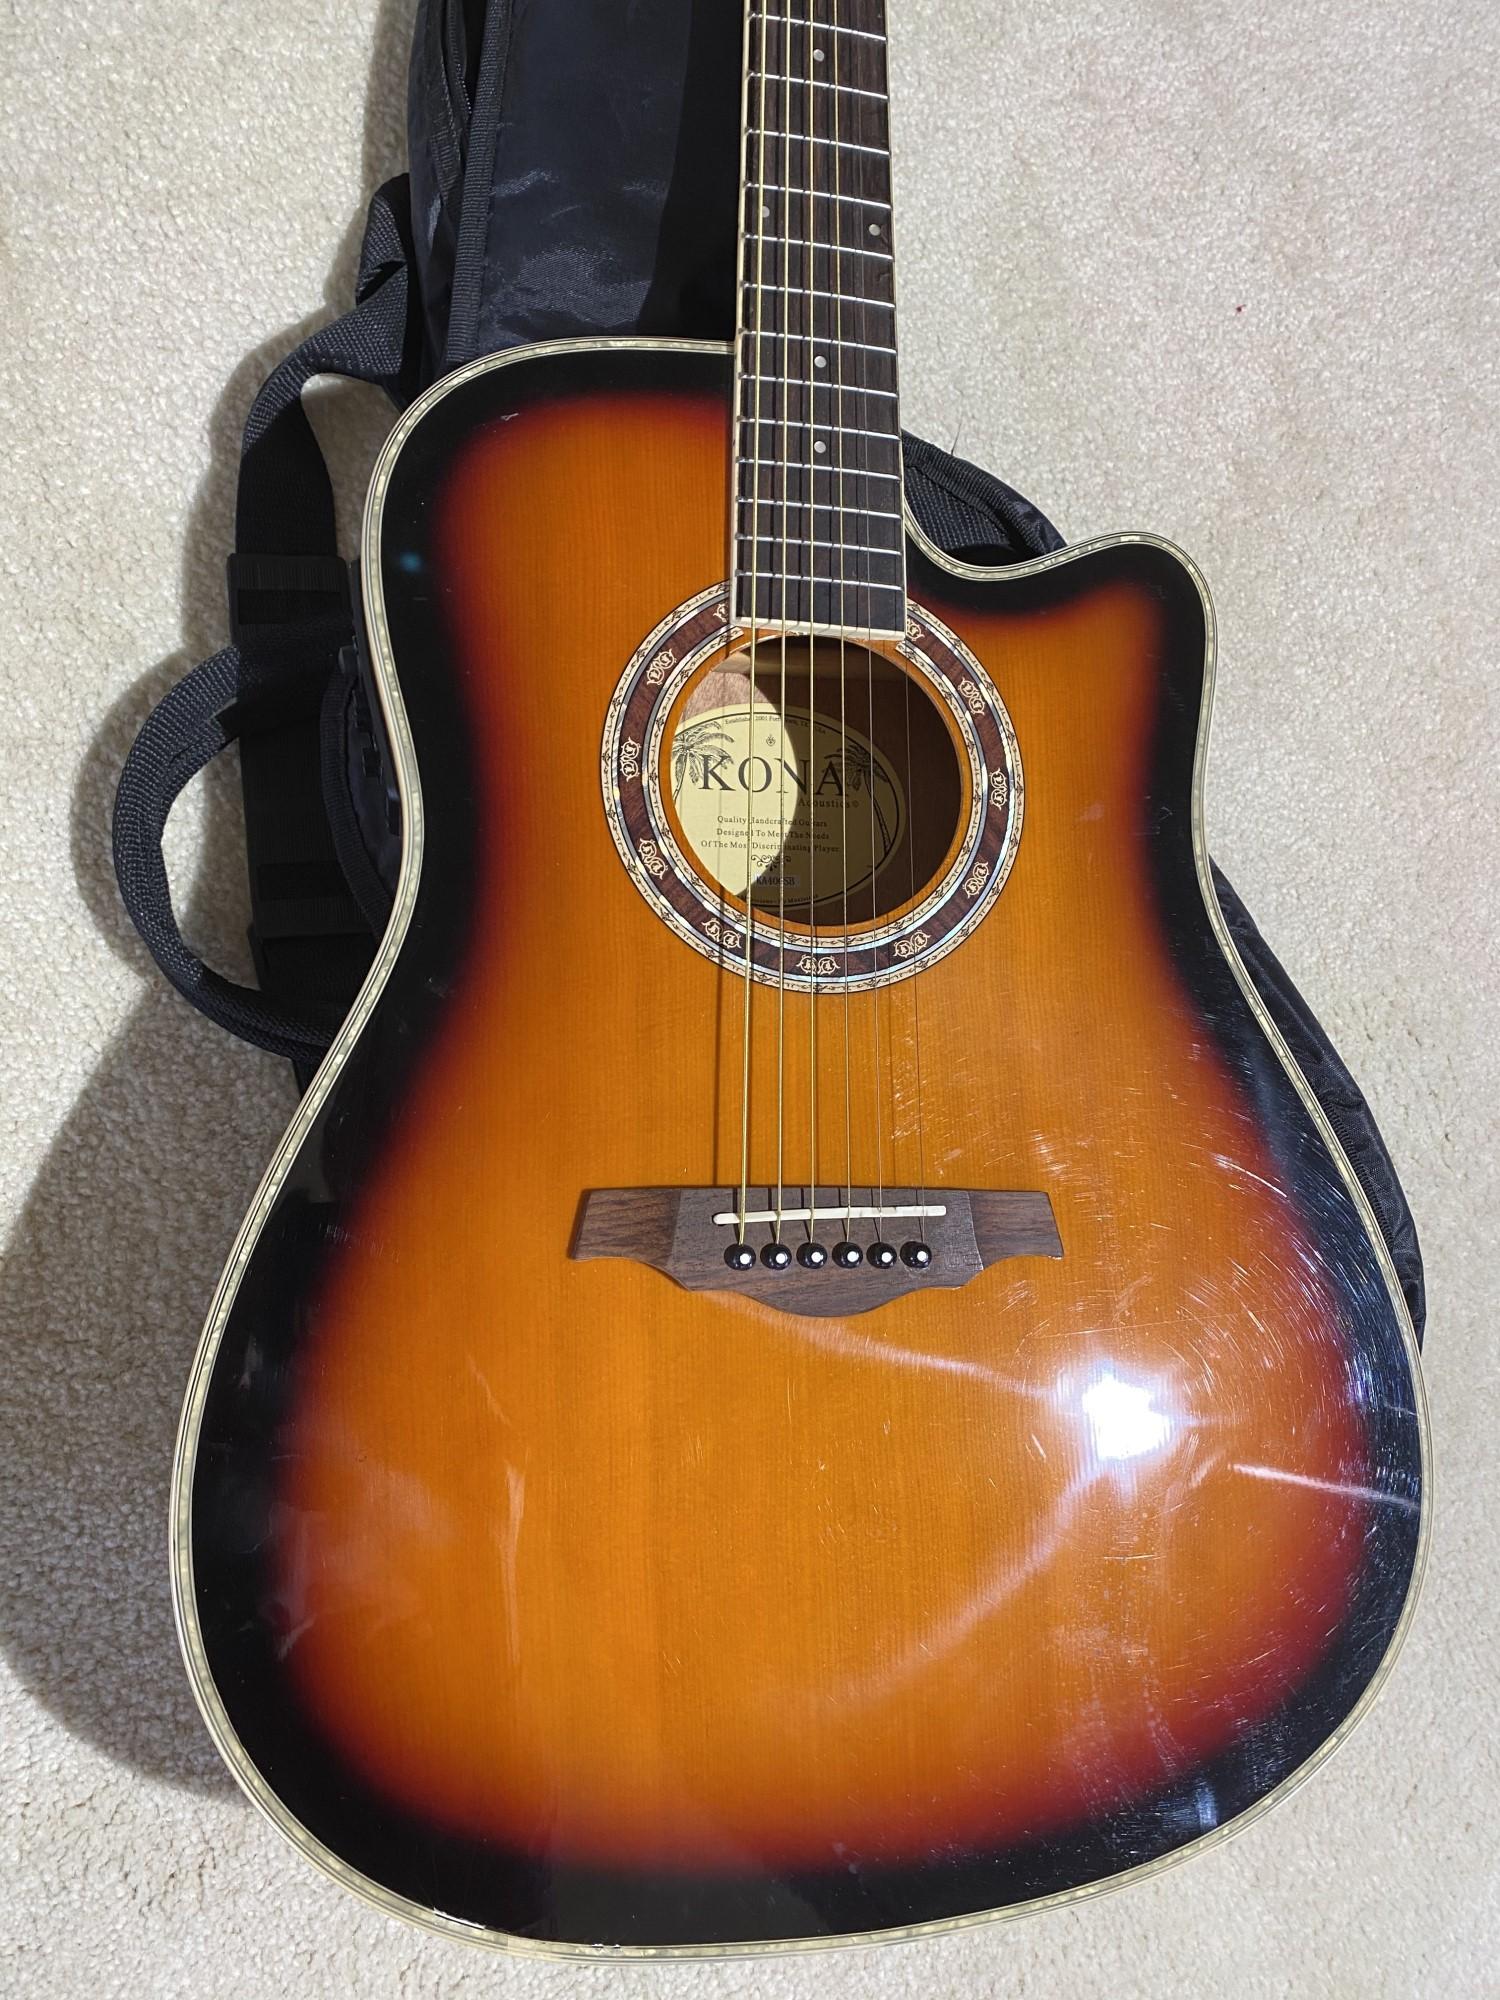 Vintage Acoustic Guitar by Kona